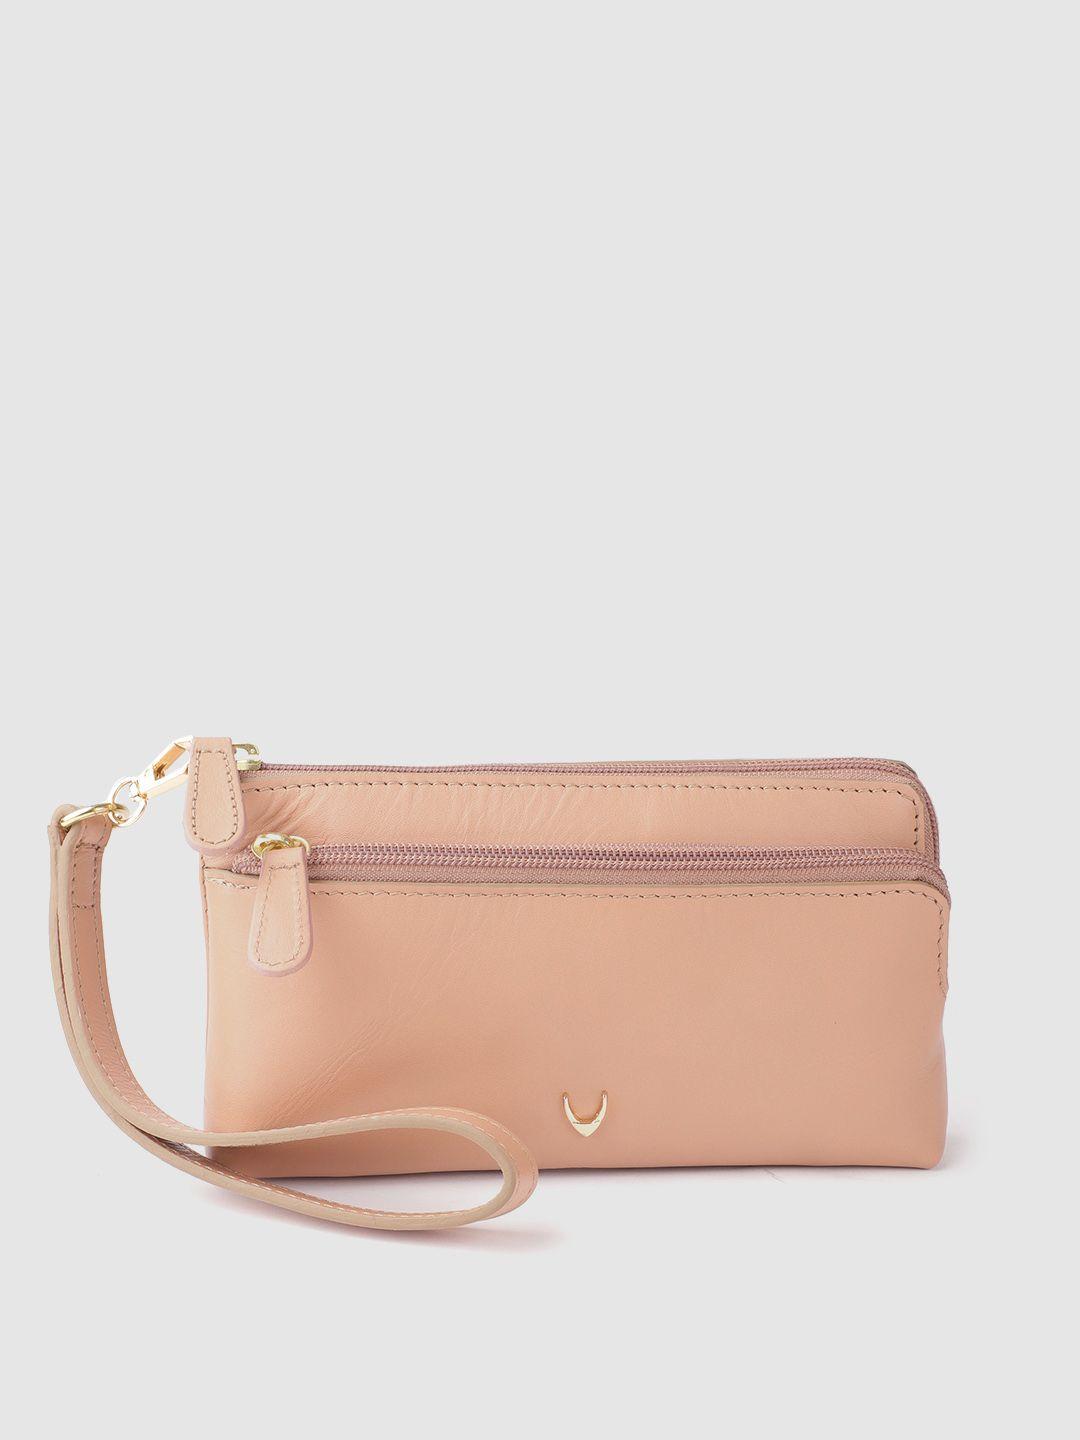 hidesign peach-coloured solid leather purse clutch